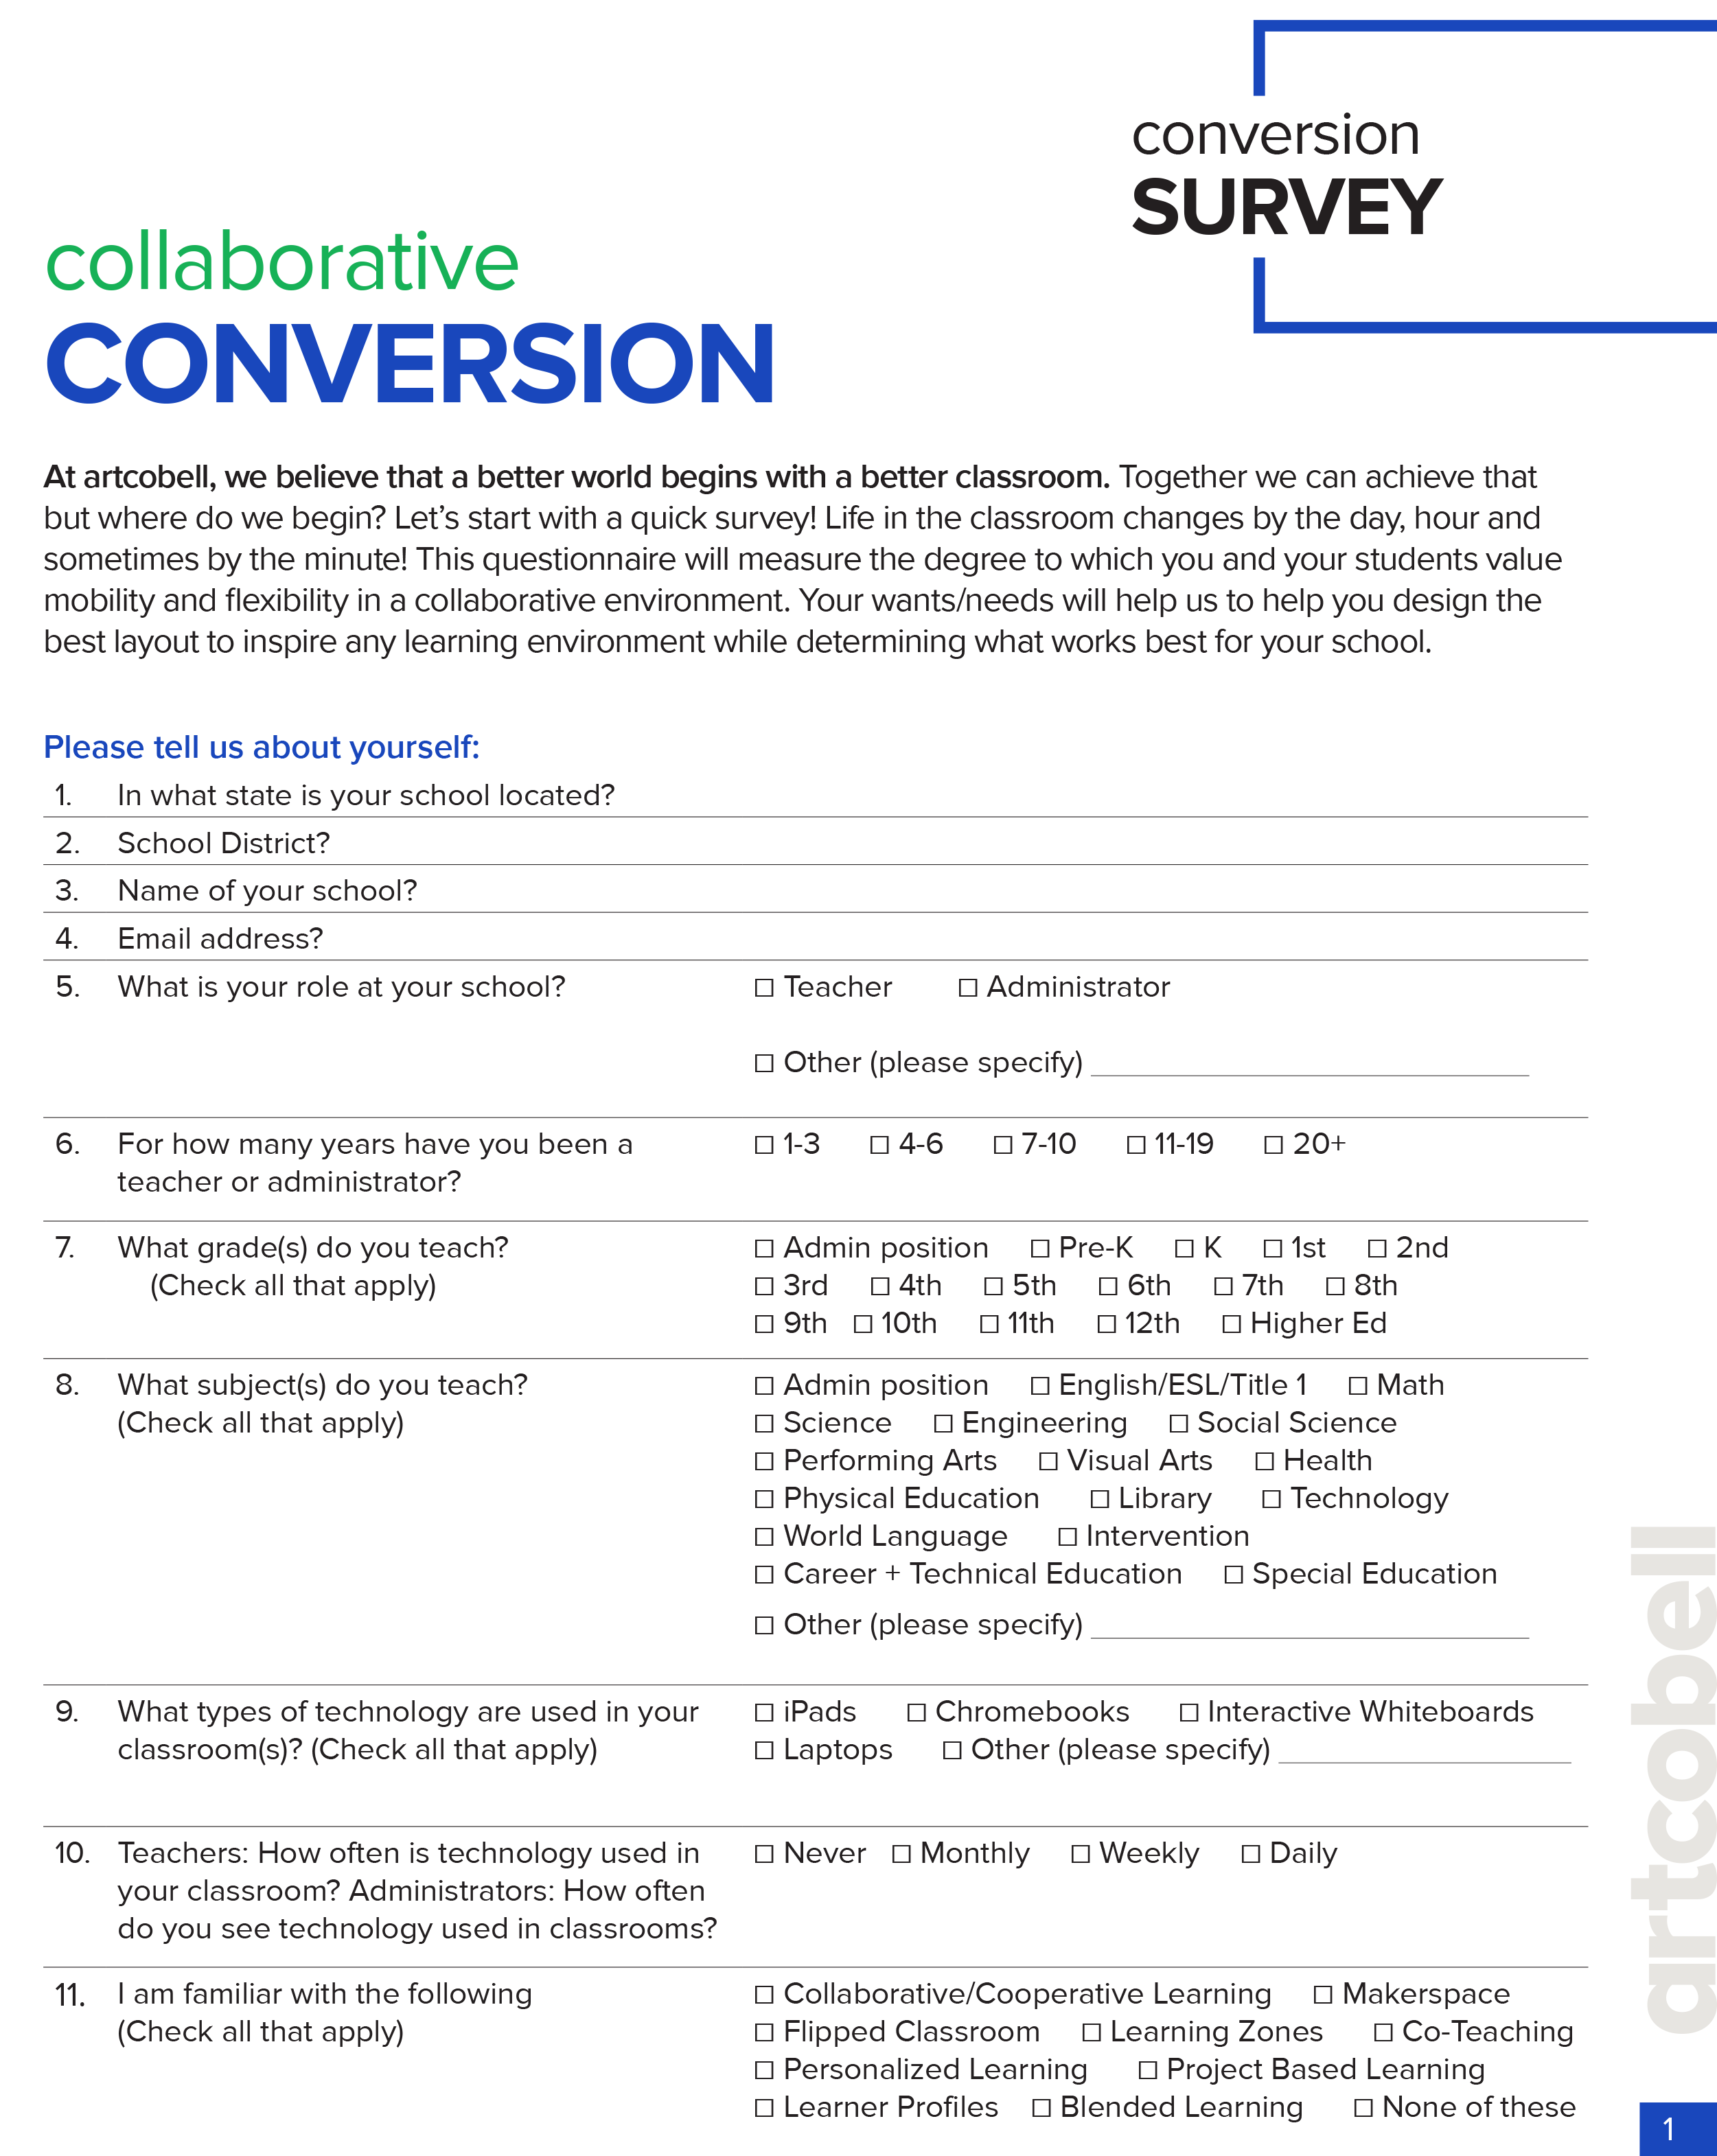 Survey_CollaborativeConversionSurvey